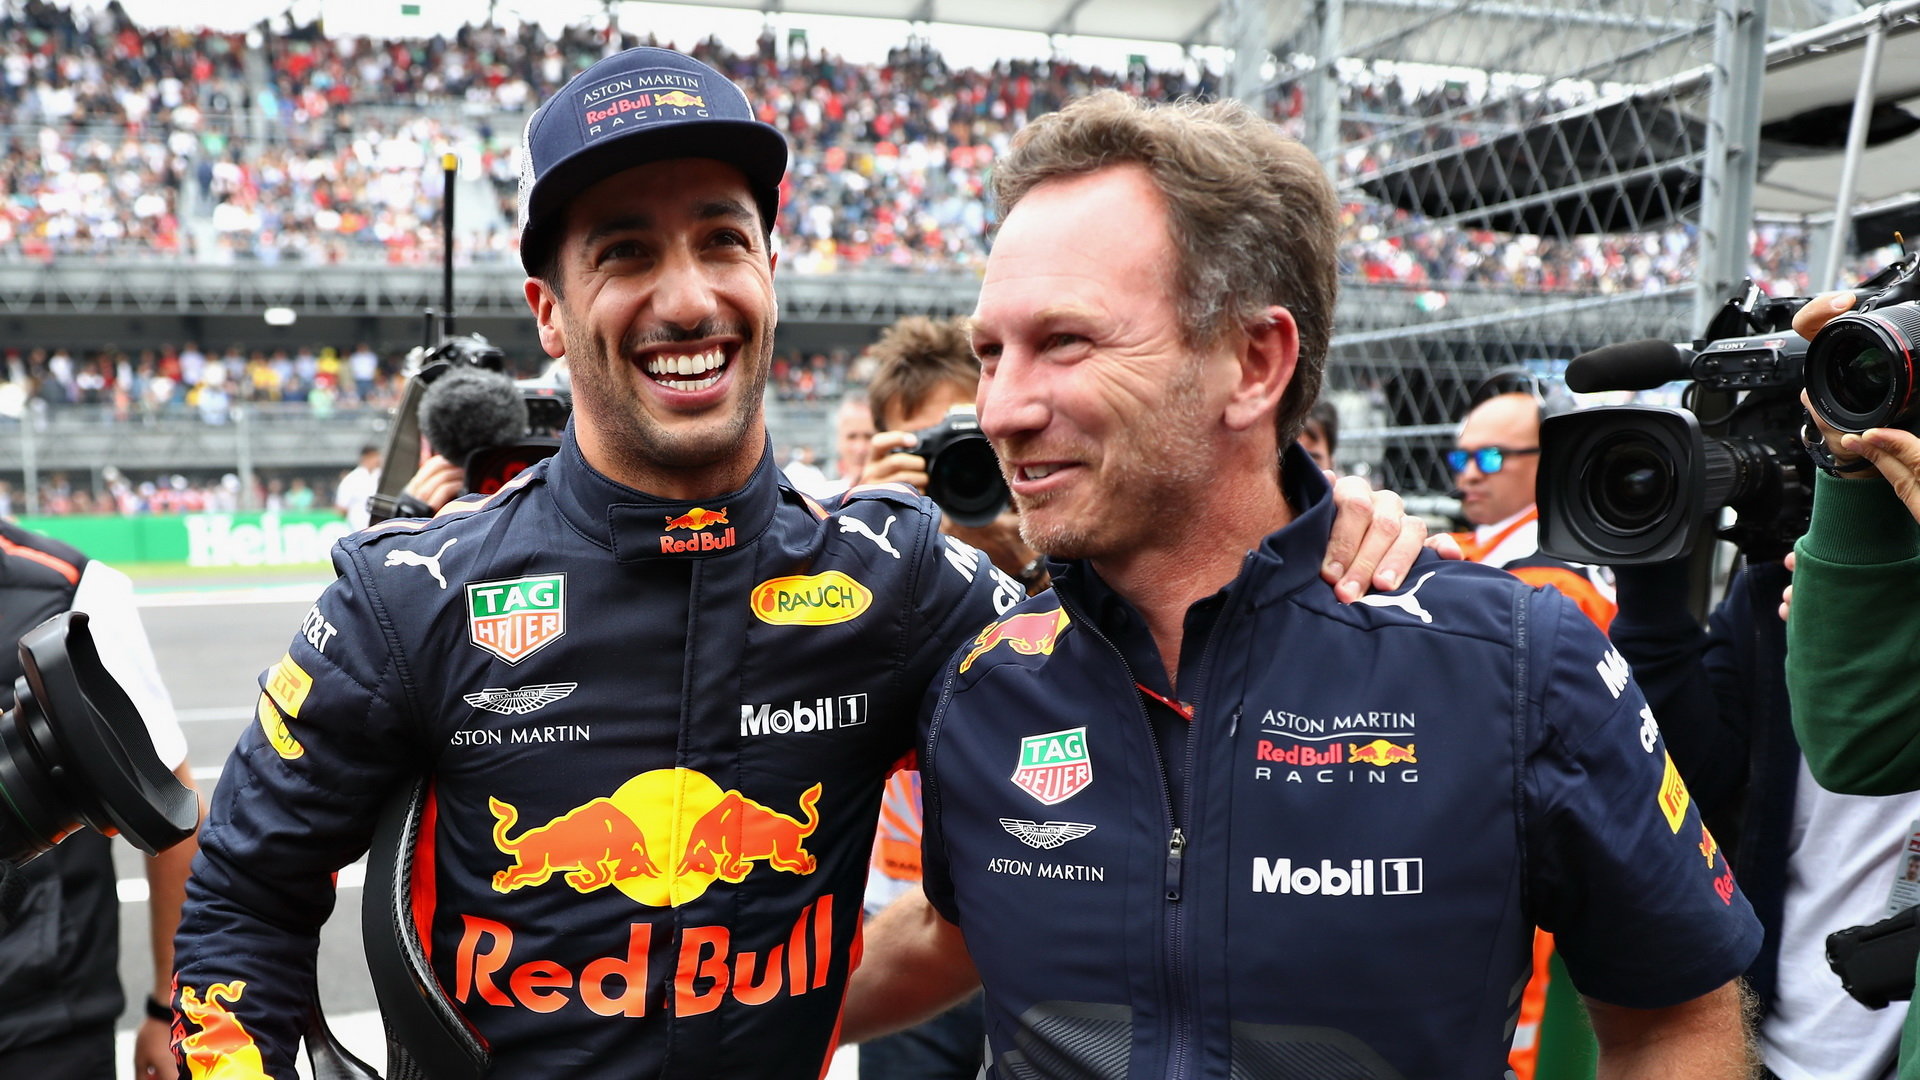 Daniel Ricciardo se raduje z Pole position po kvalifikaci v Mexiku